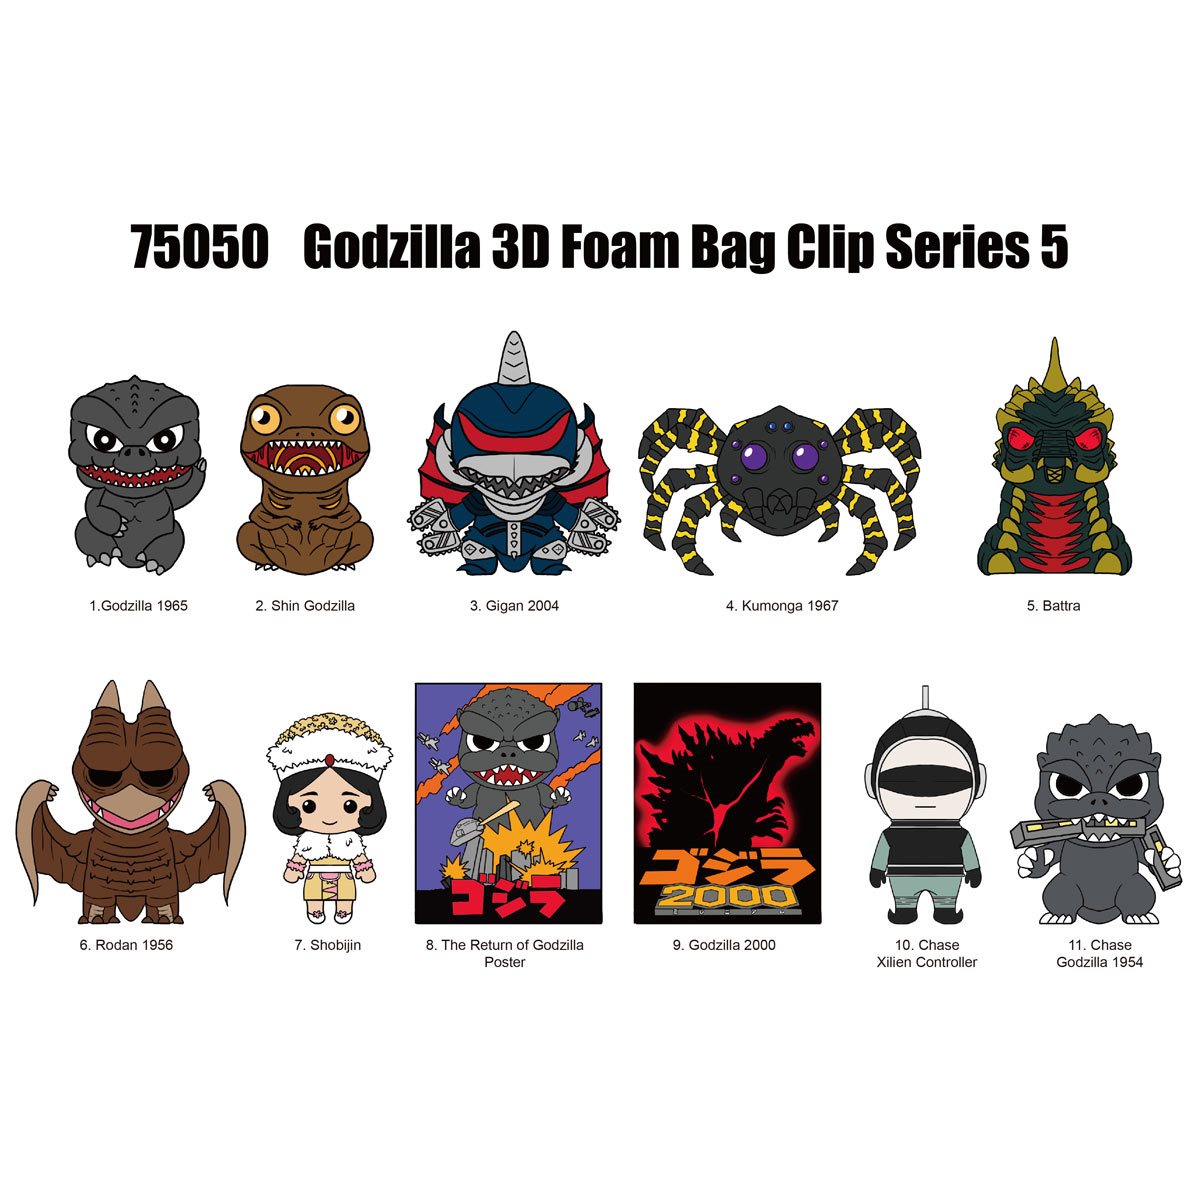 Monogram Godzilla Series 3 Blind Bag Figural Bag Clip